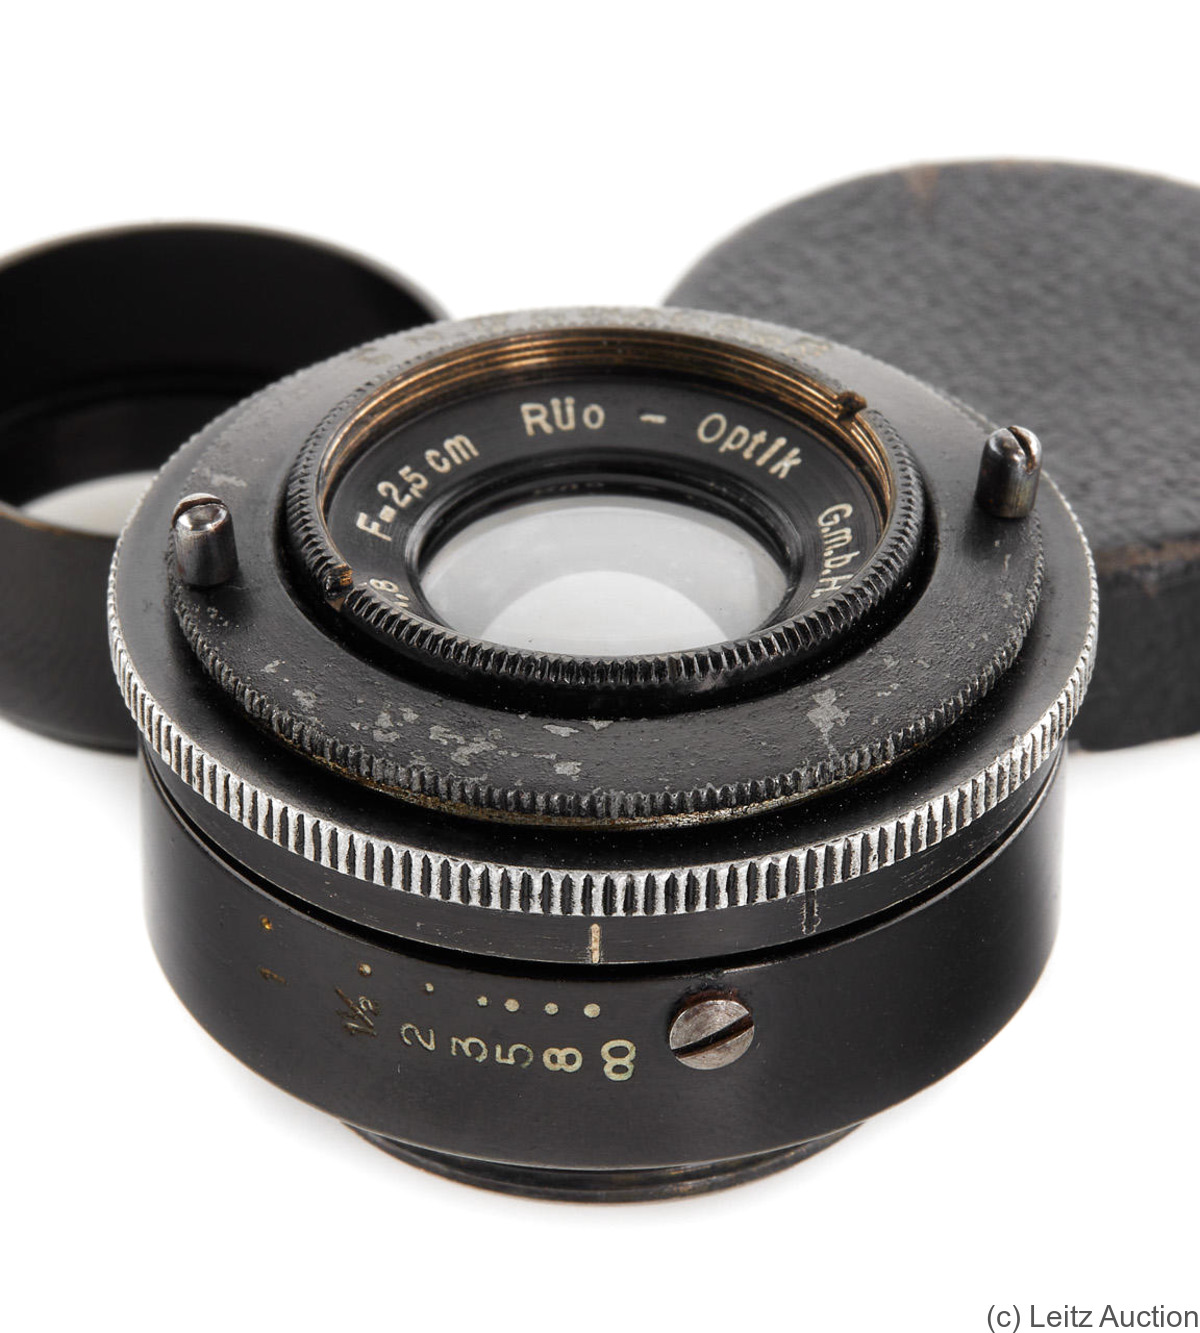 Rüo: 25mm (2.5cm) f1.8 Kino (25mm mount) camera